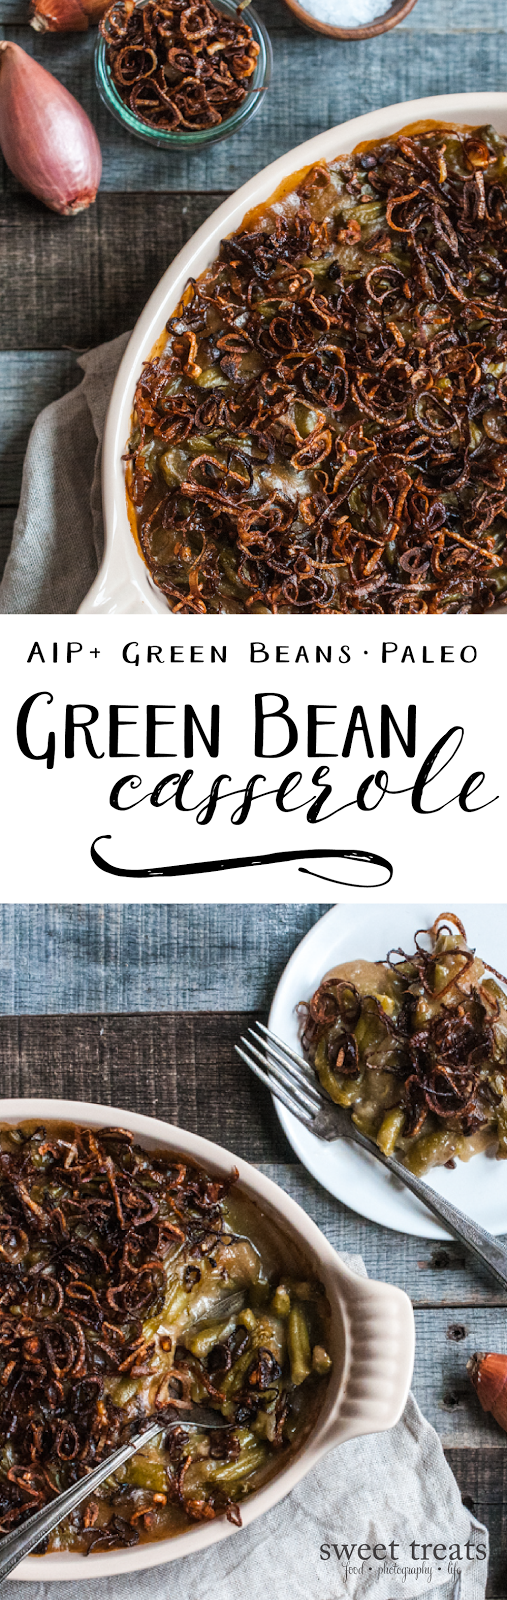 Green Bean Casserole (Paleo, AIP + Green Beans, Nut-free, Whole30) 